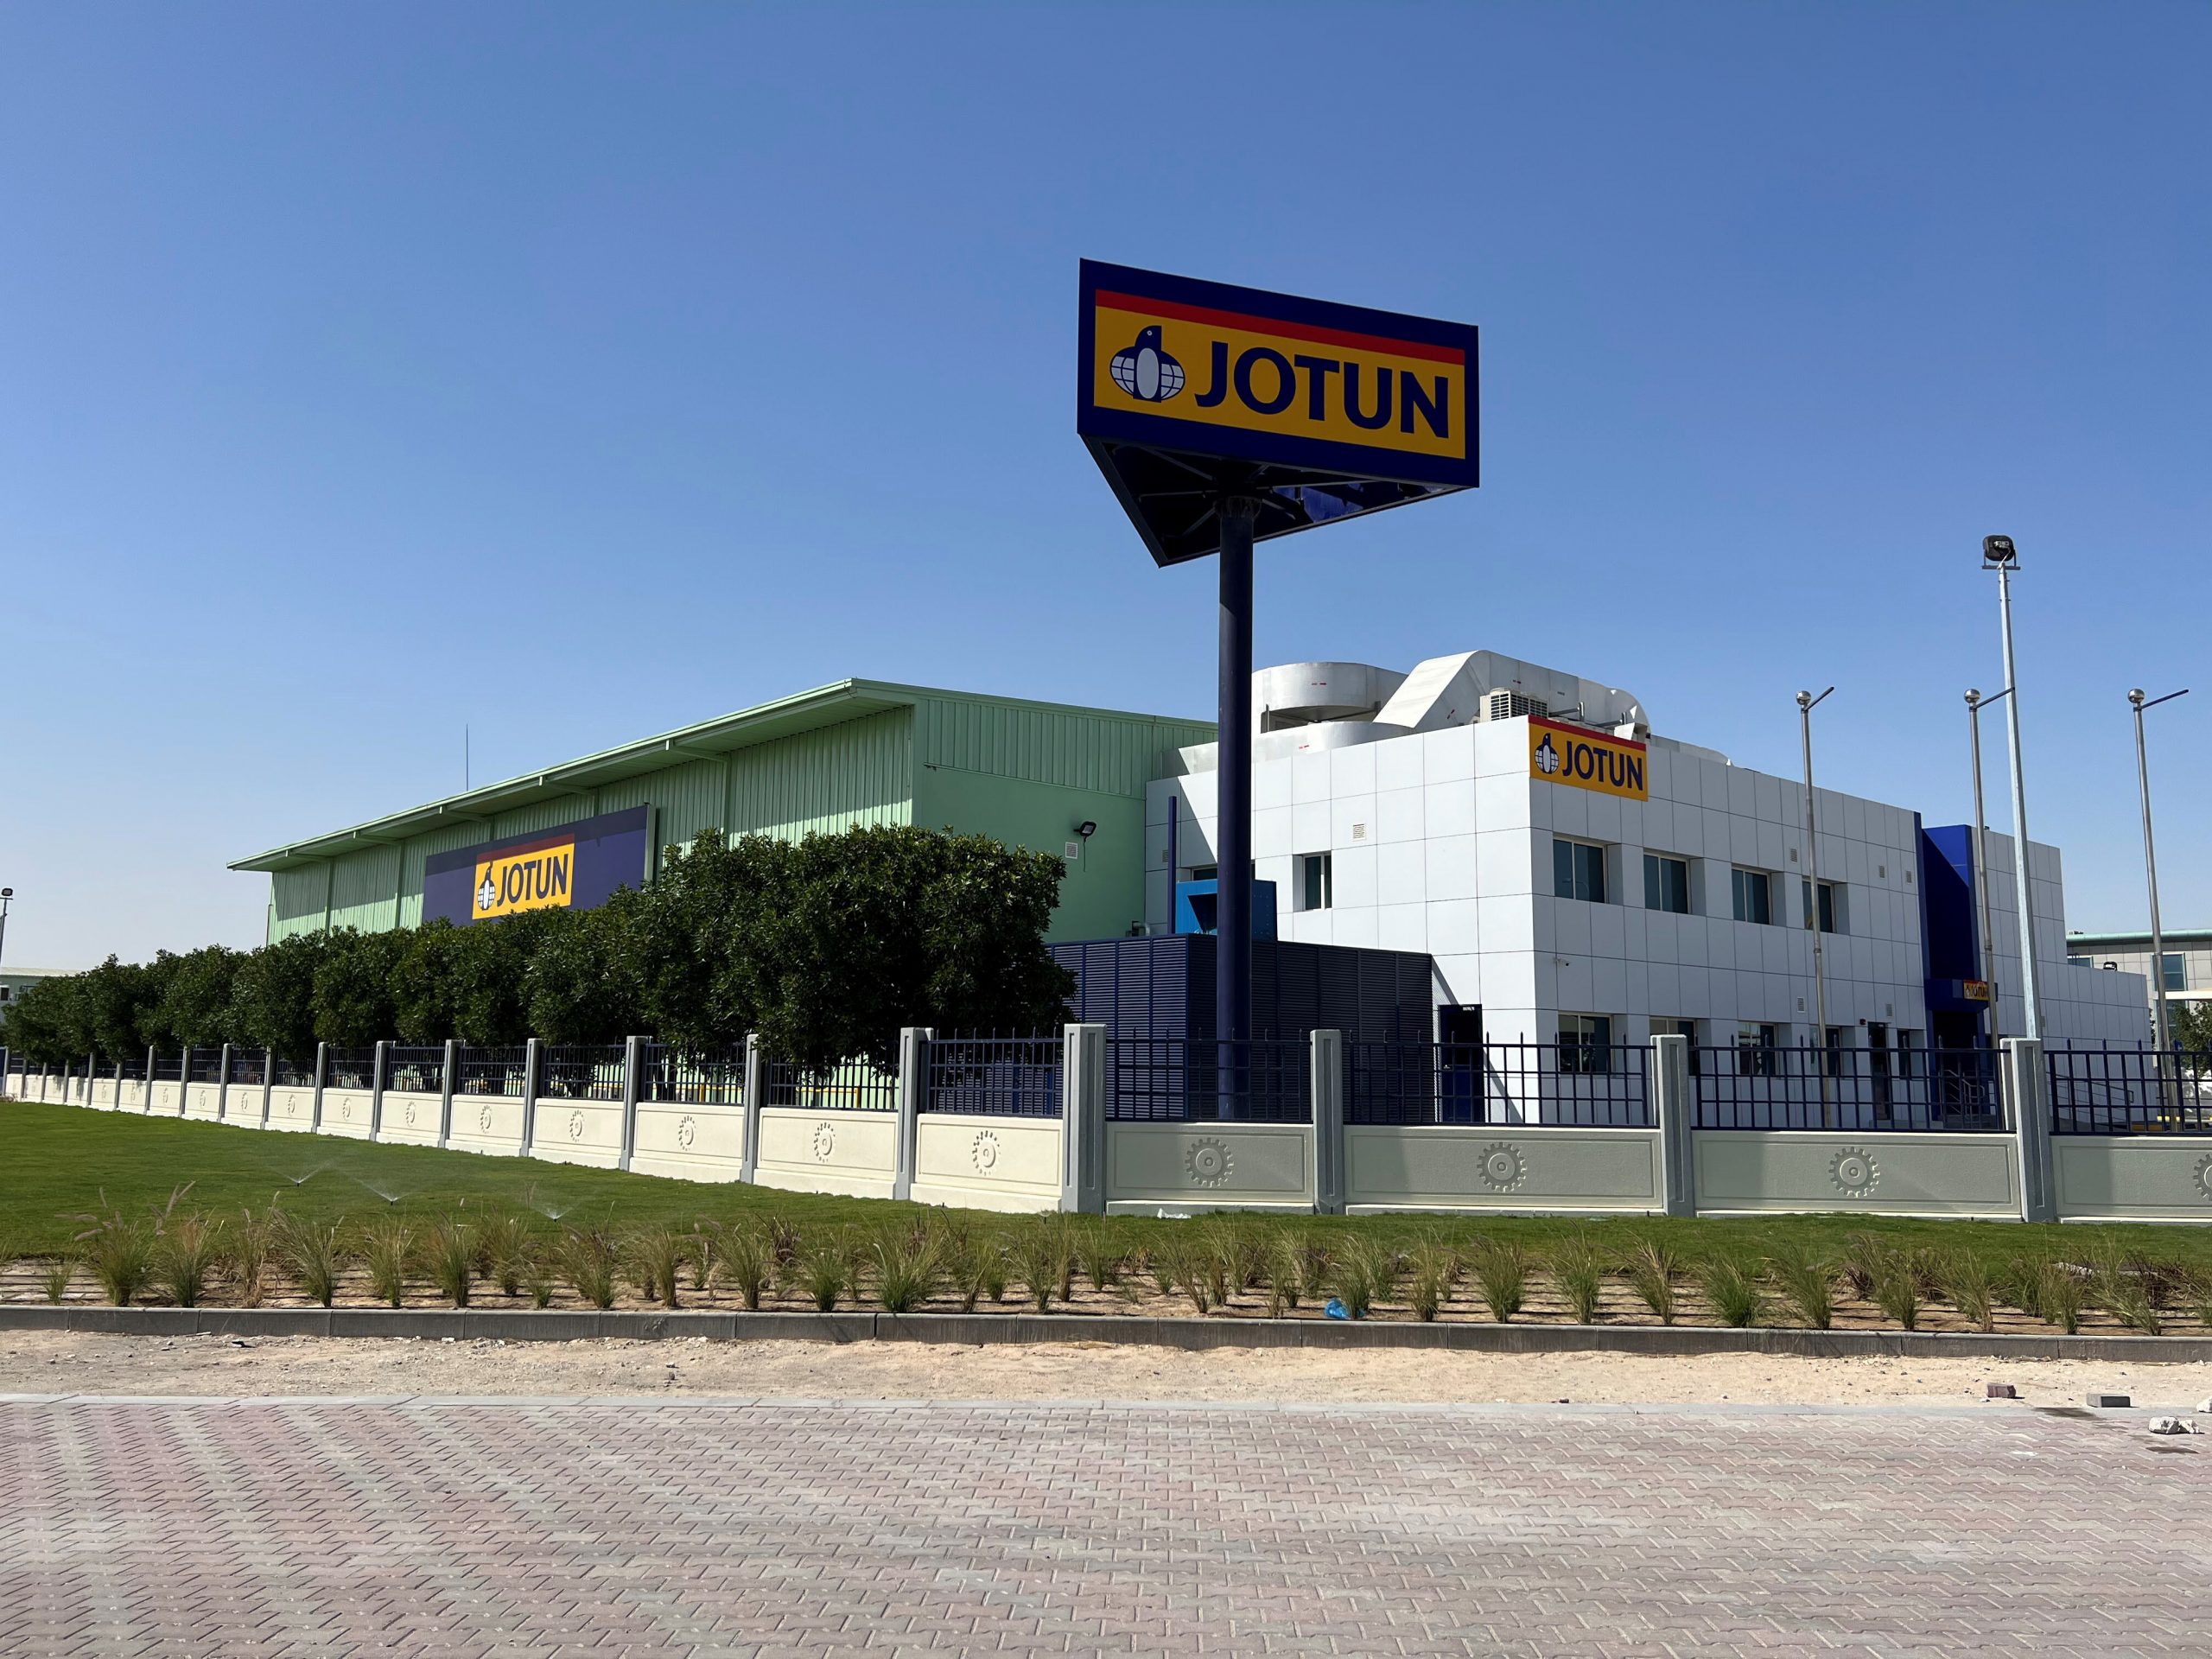 Jotun inaugurates a new 20 million litres production facility in Qatar